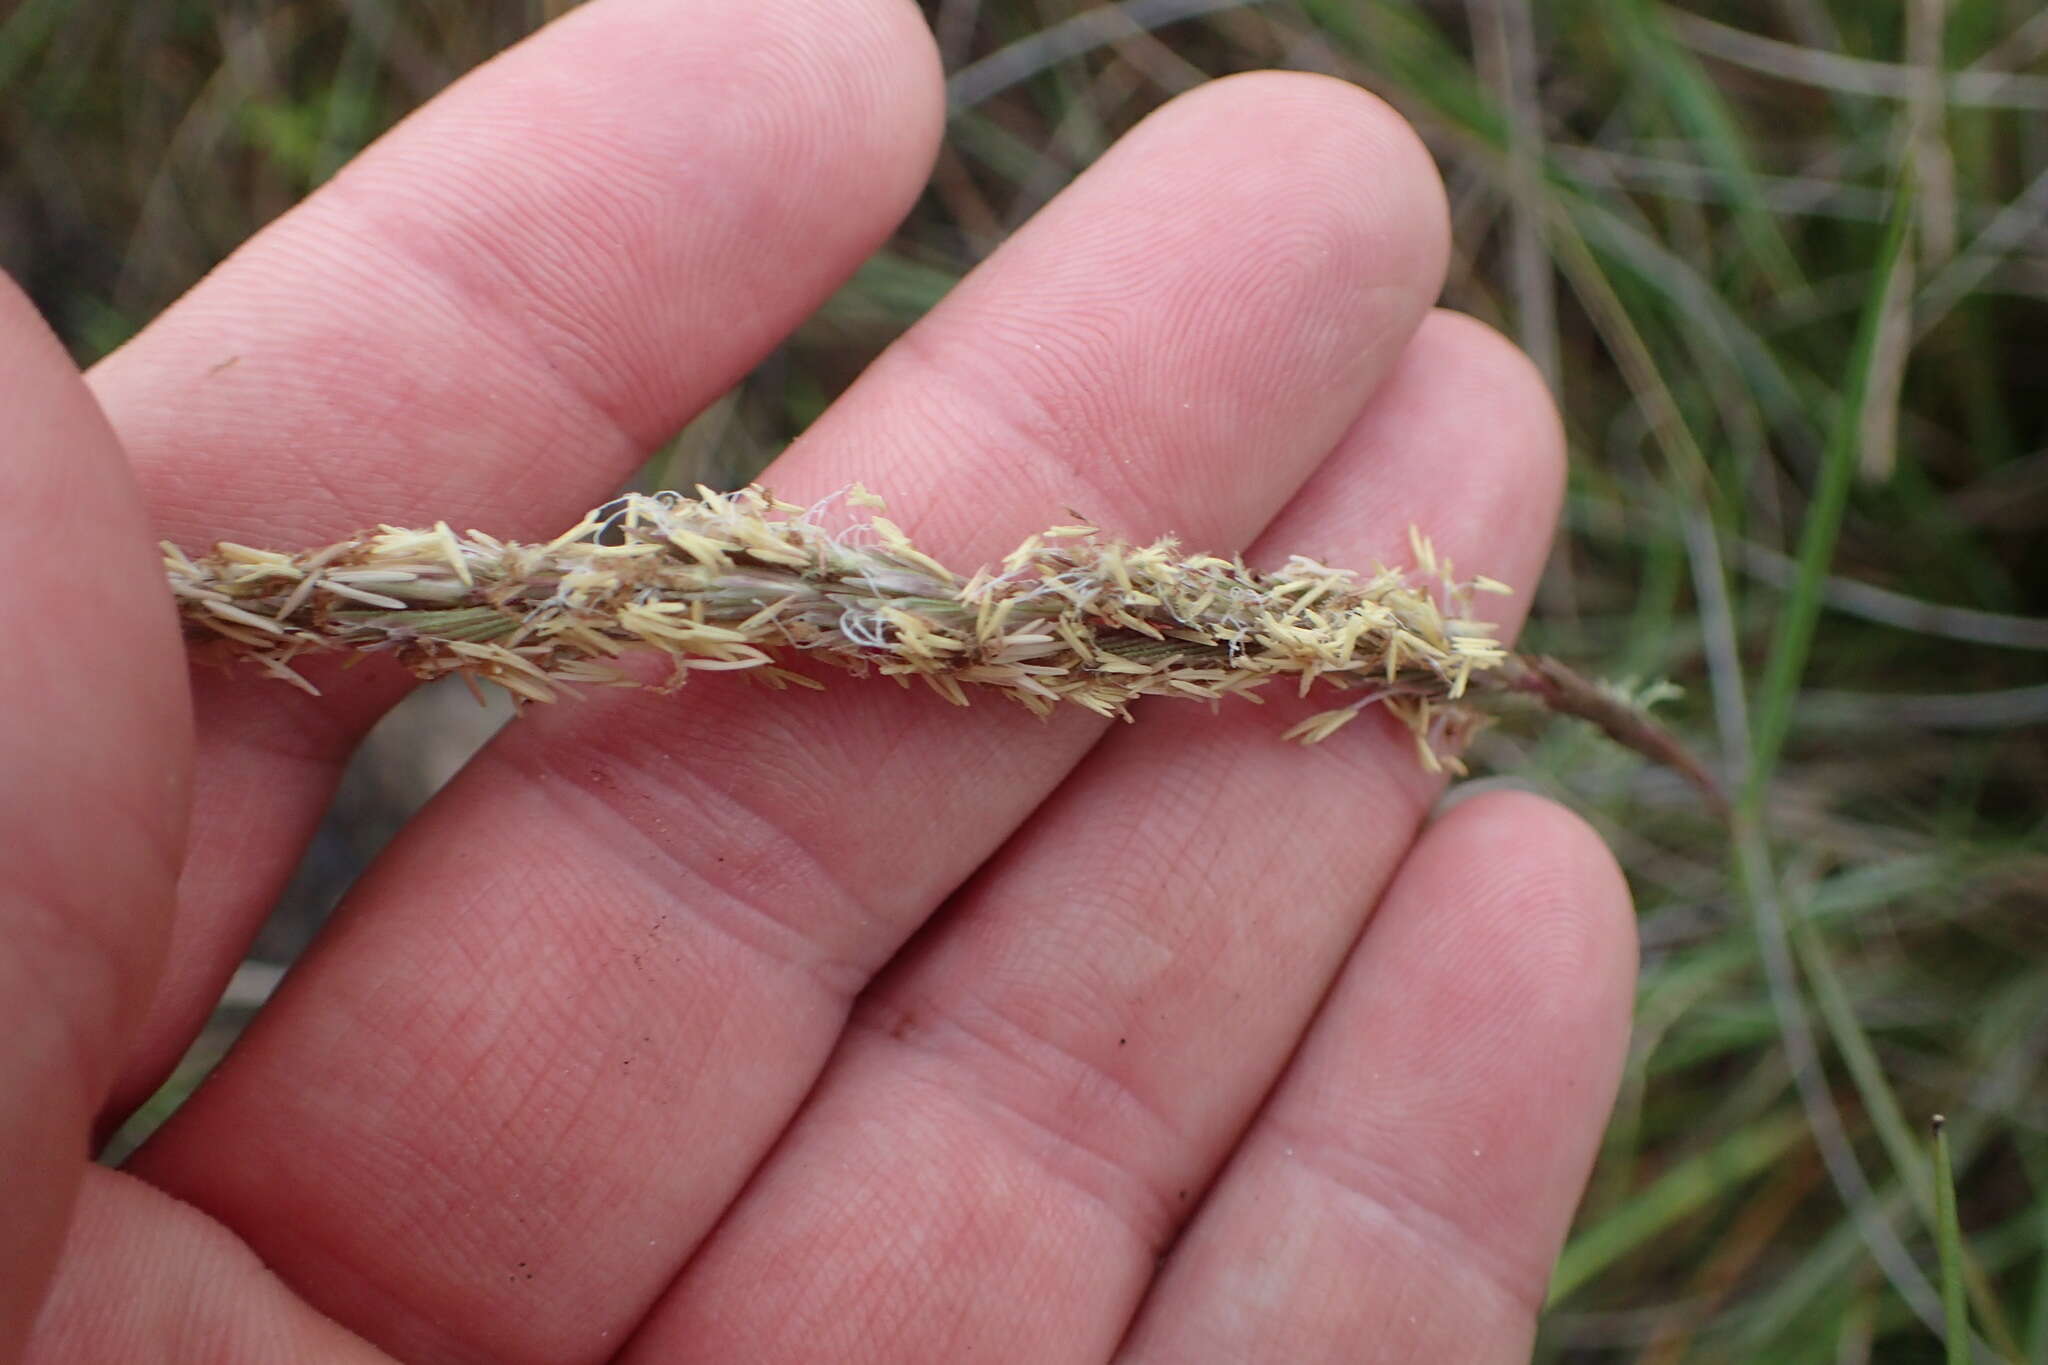 Image of Gulf Cord Grass